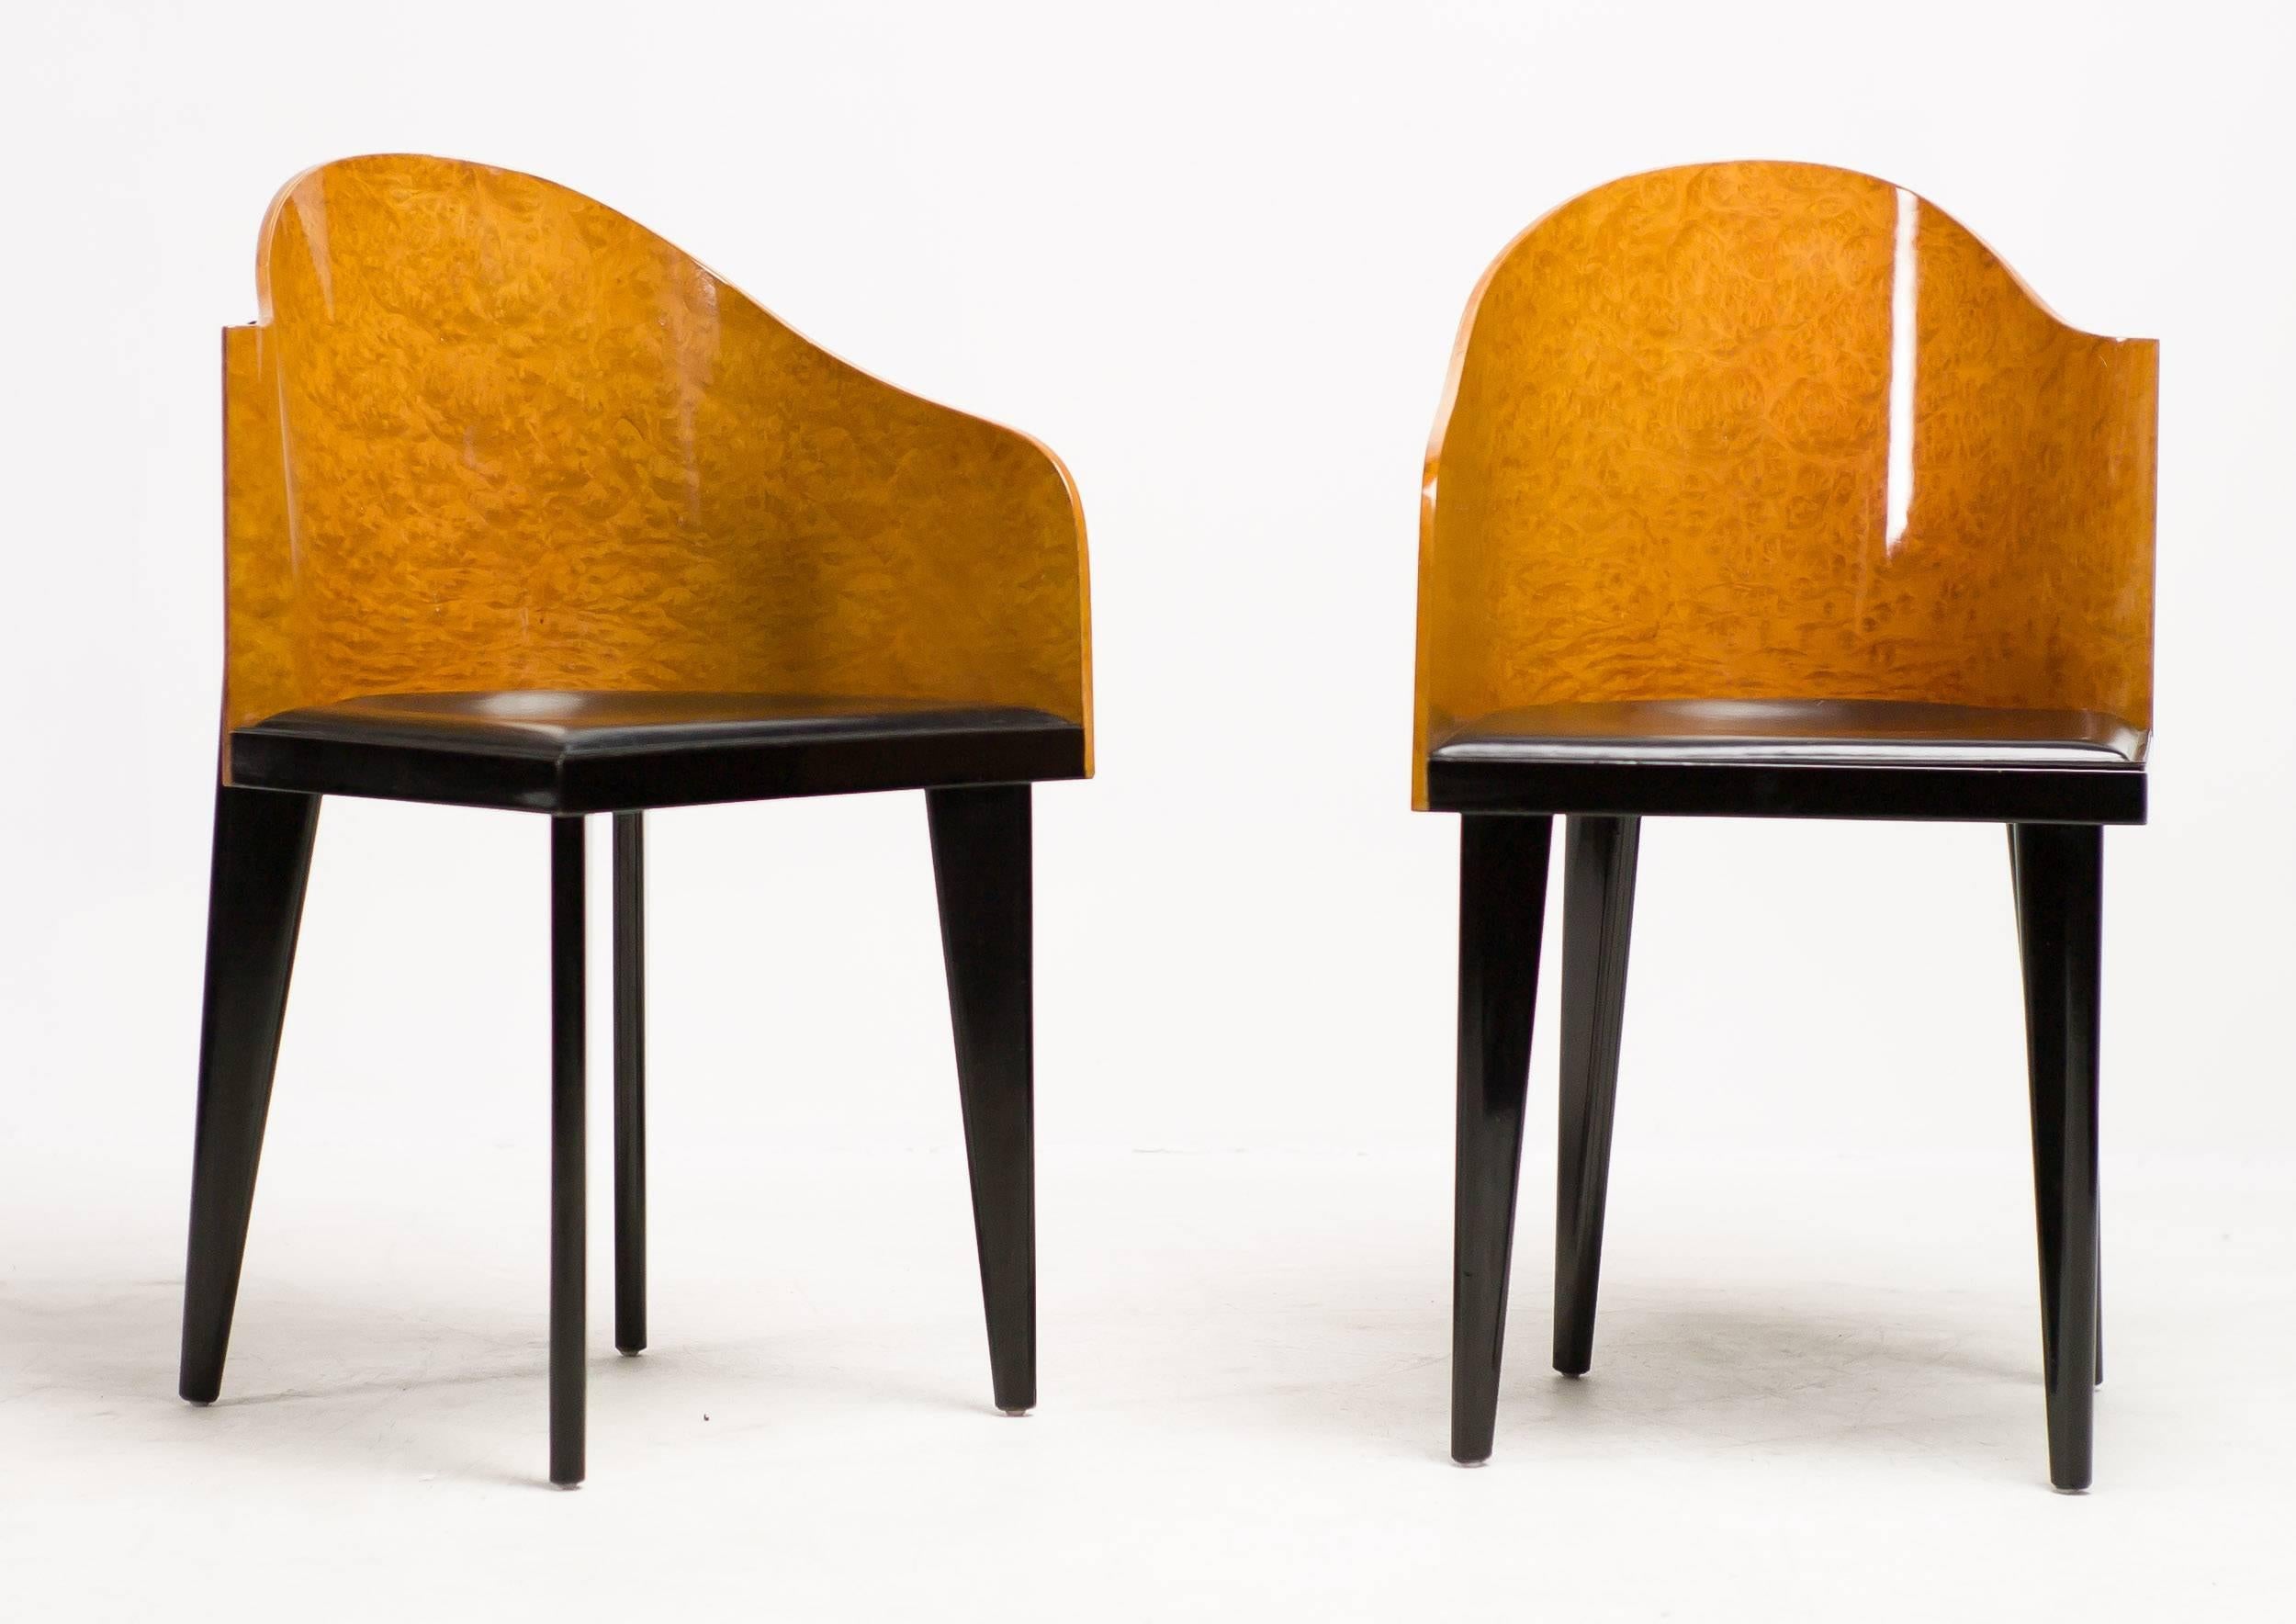 Post-Modern Toscana Chairs Designed by Piero Sartogo for Saporiti